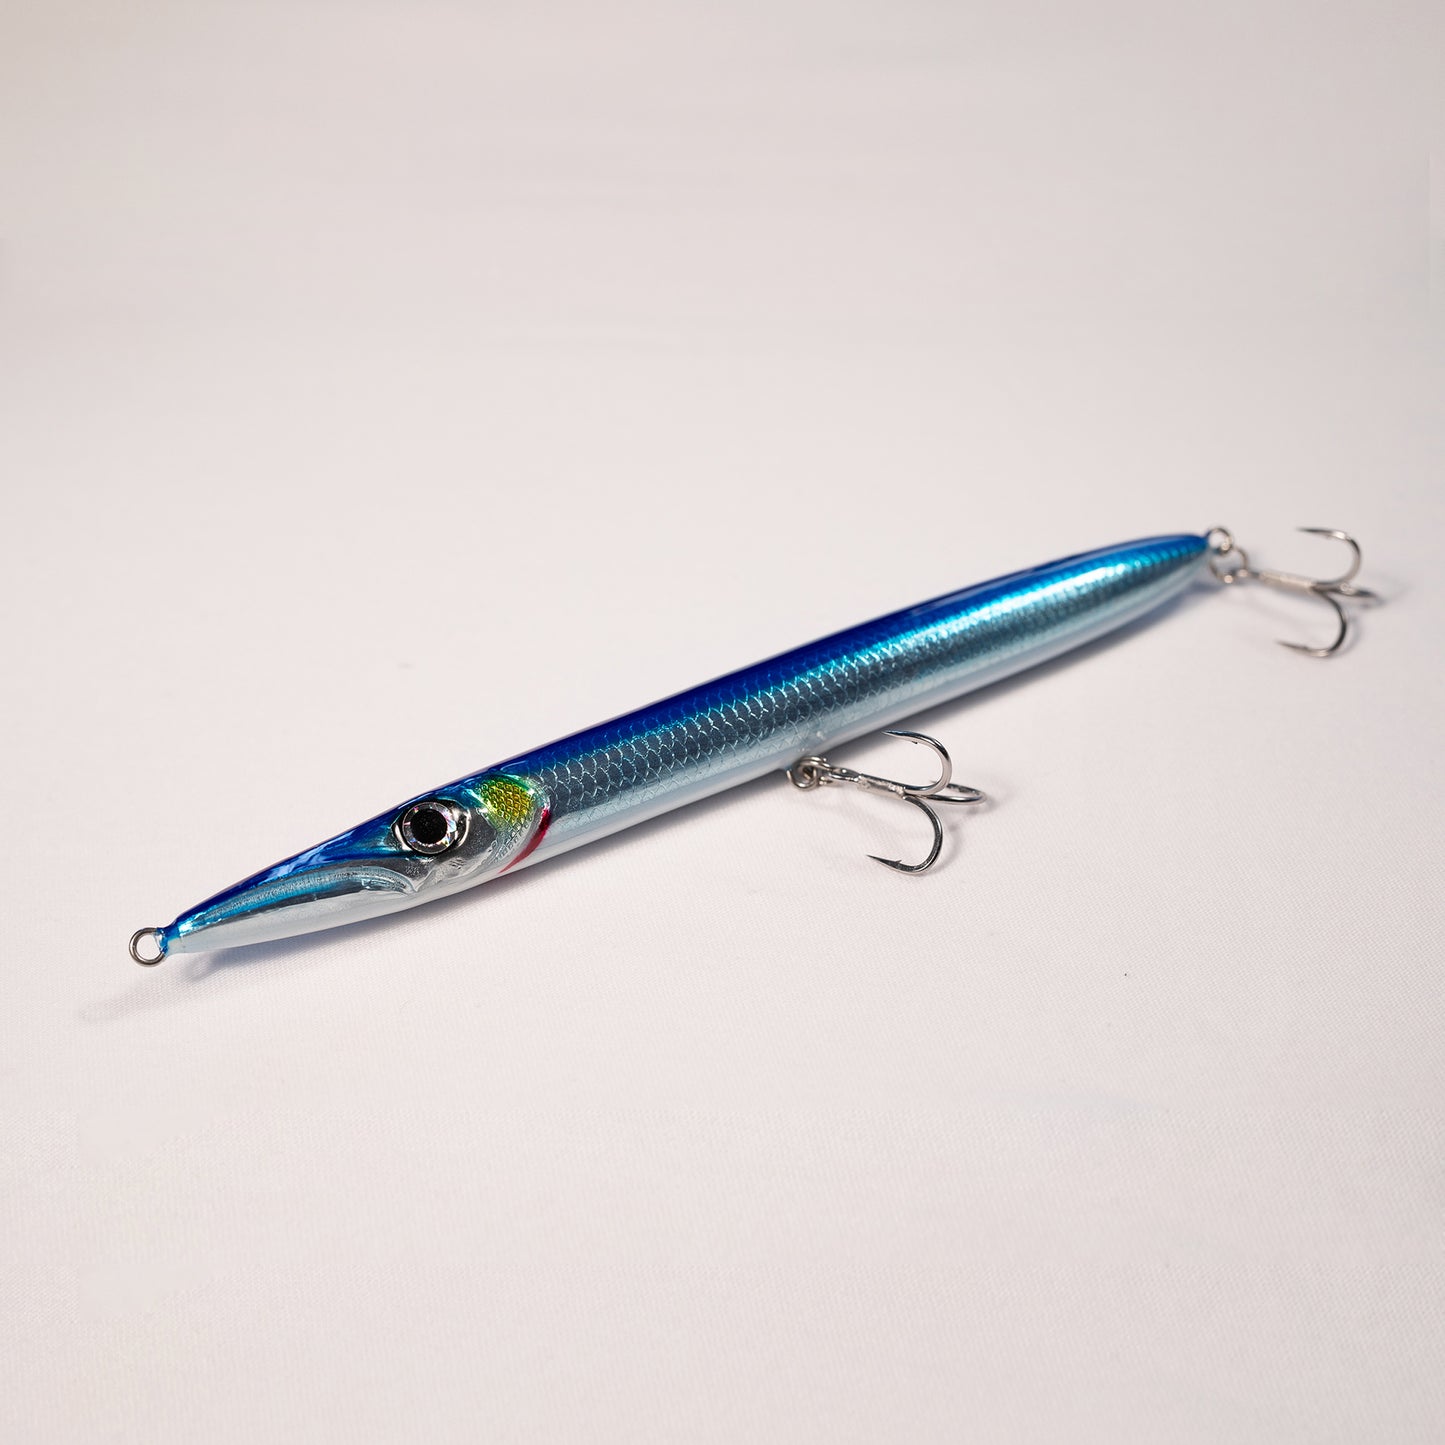 KZ BR200 Blue Needlefish 55g 200mm sinking surface Lure – KZ Handmade Lures